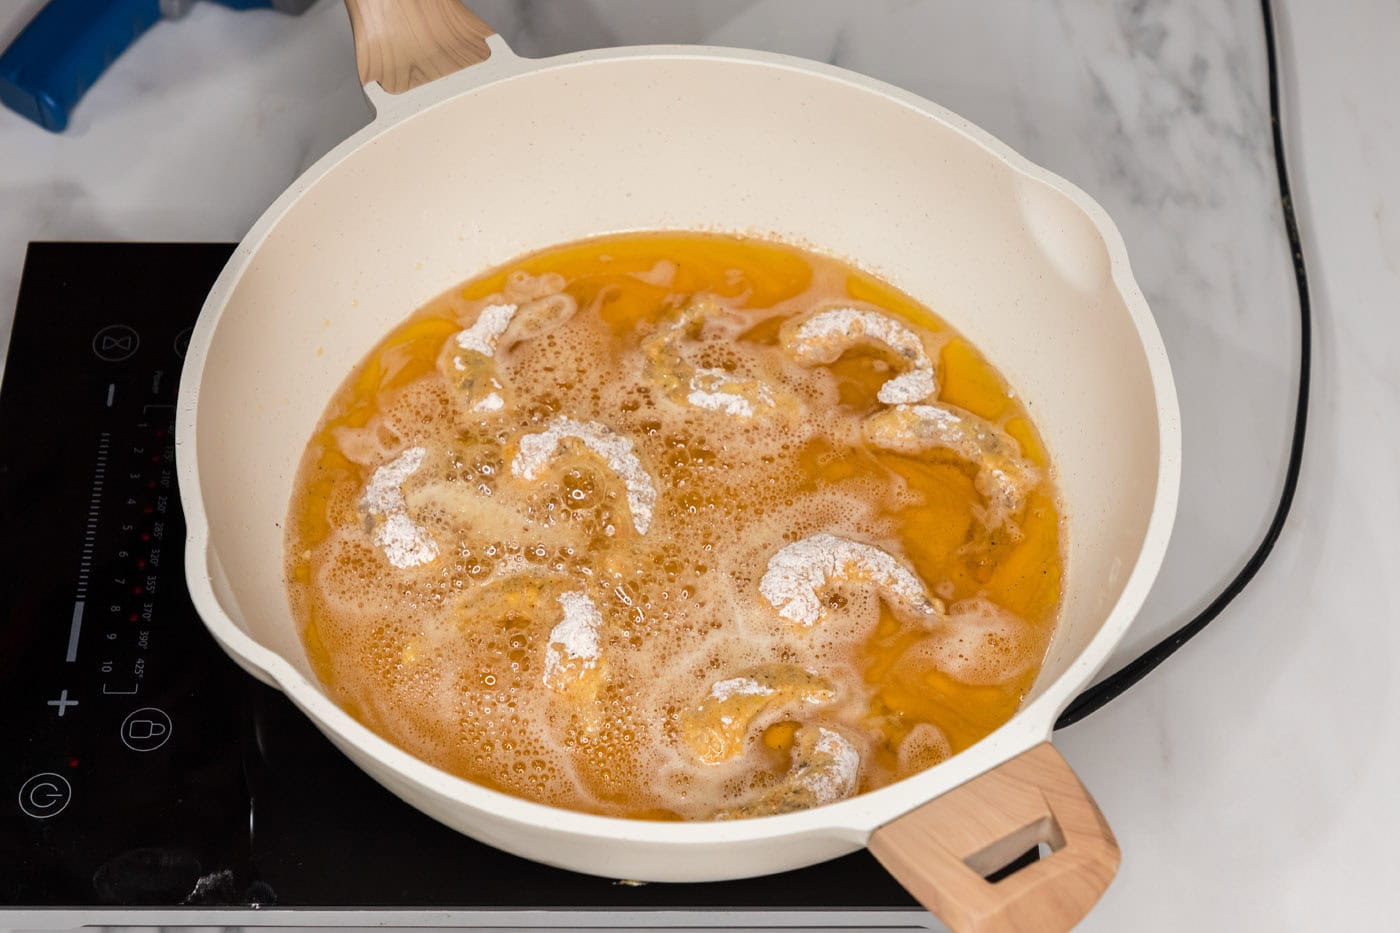 frying shrimp in oil in a skillet